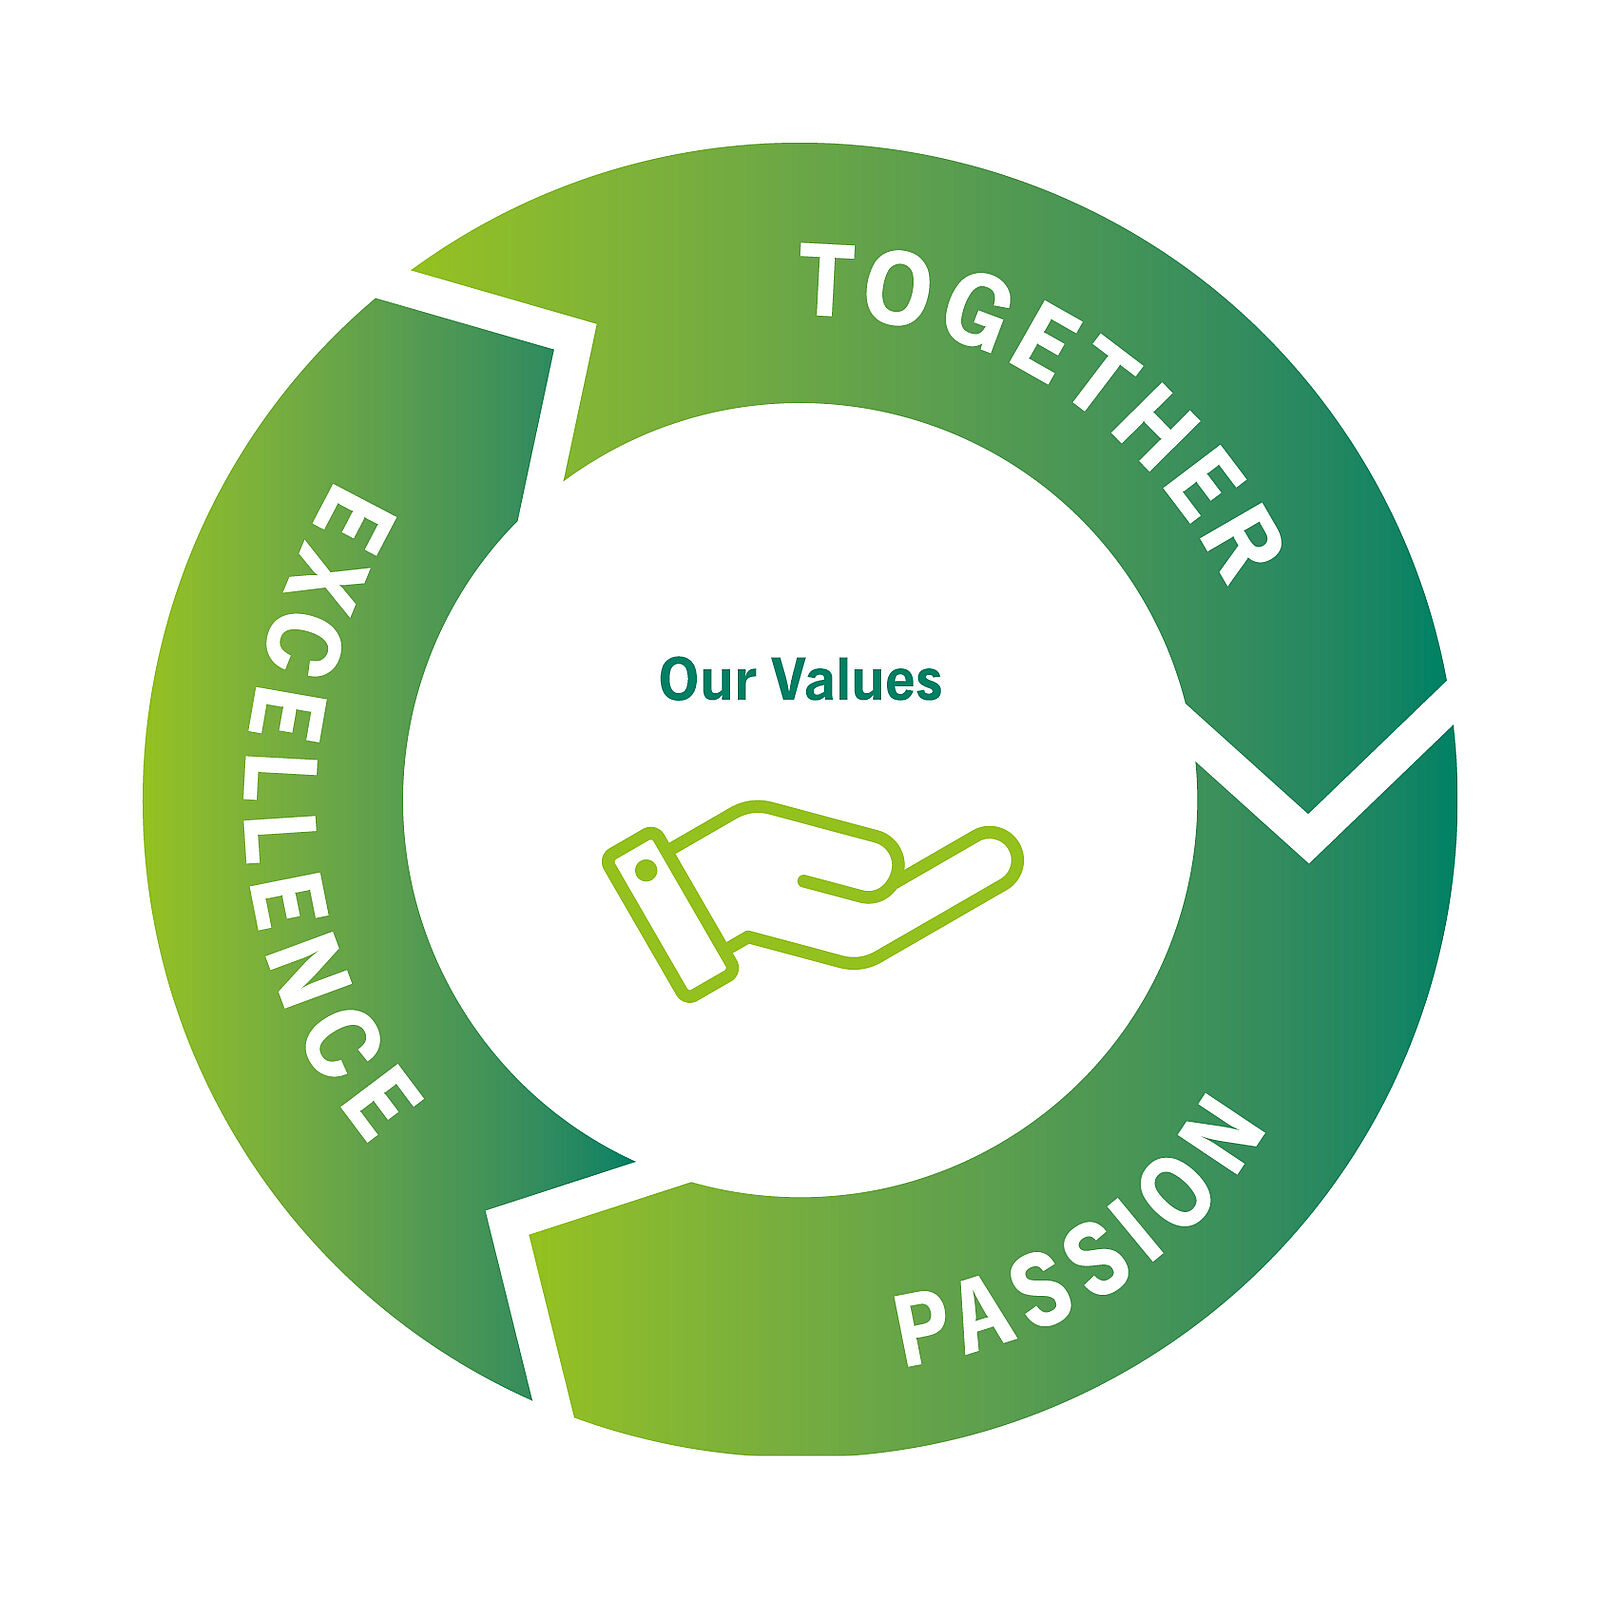 Biohealth mission statement: values